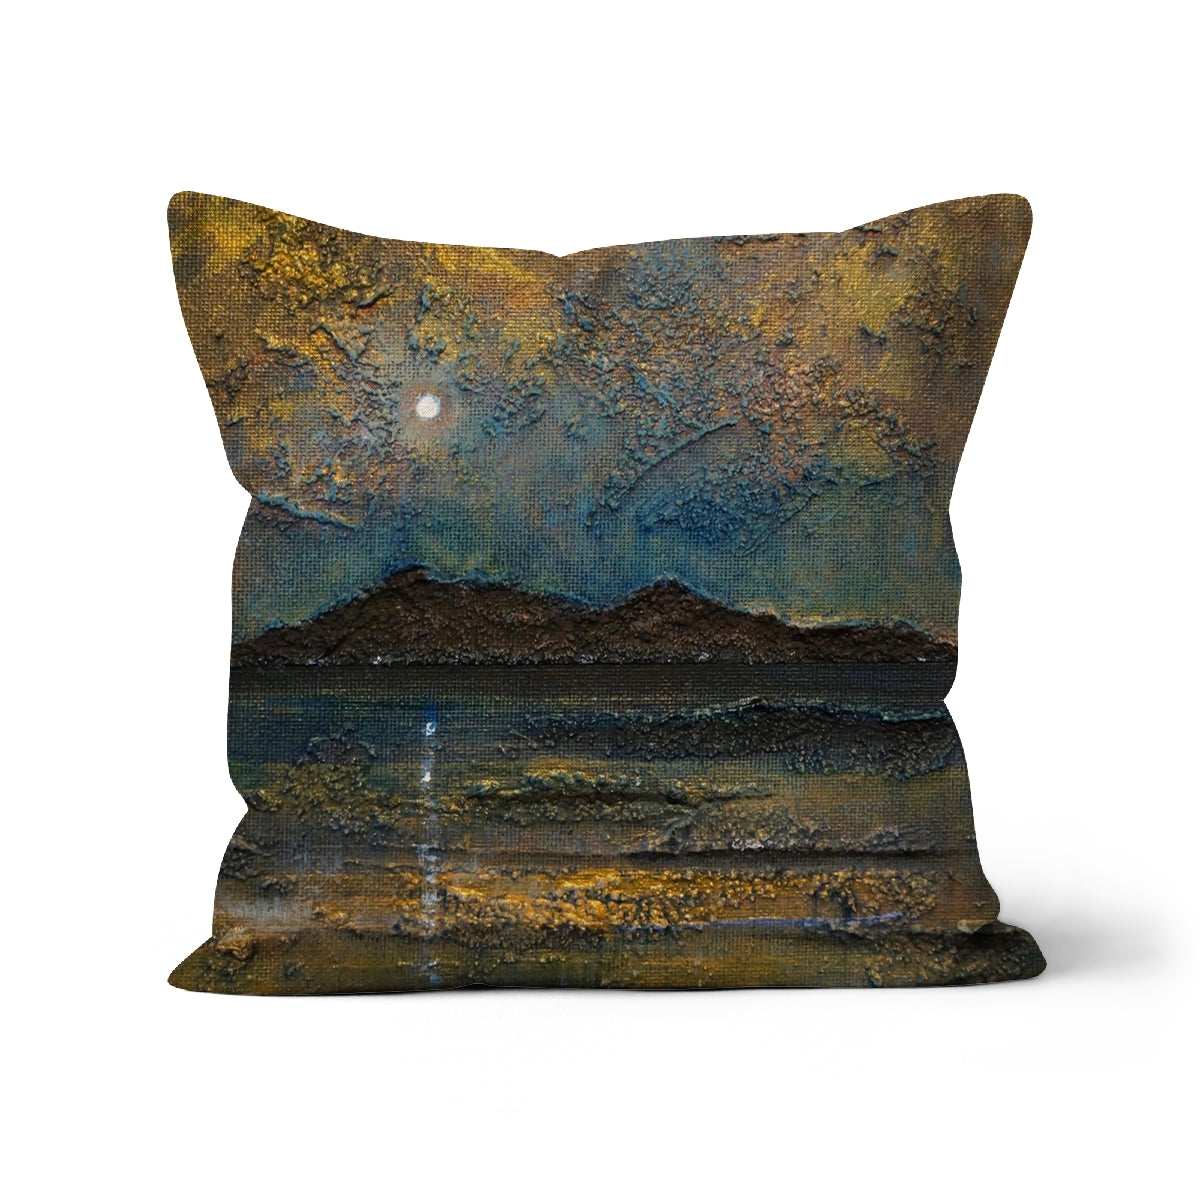 Arran Moonlight Art Gifts Cushion-Cushions-Arran Art Gallery-Linen-24"x24"-Paintings, Prints, Homeware, Art Gifts From Scotland By Scottish Artist Kevin Hunter